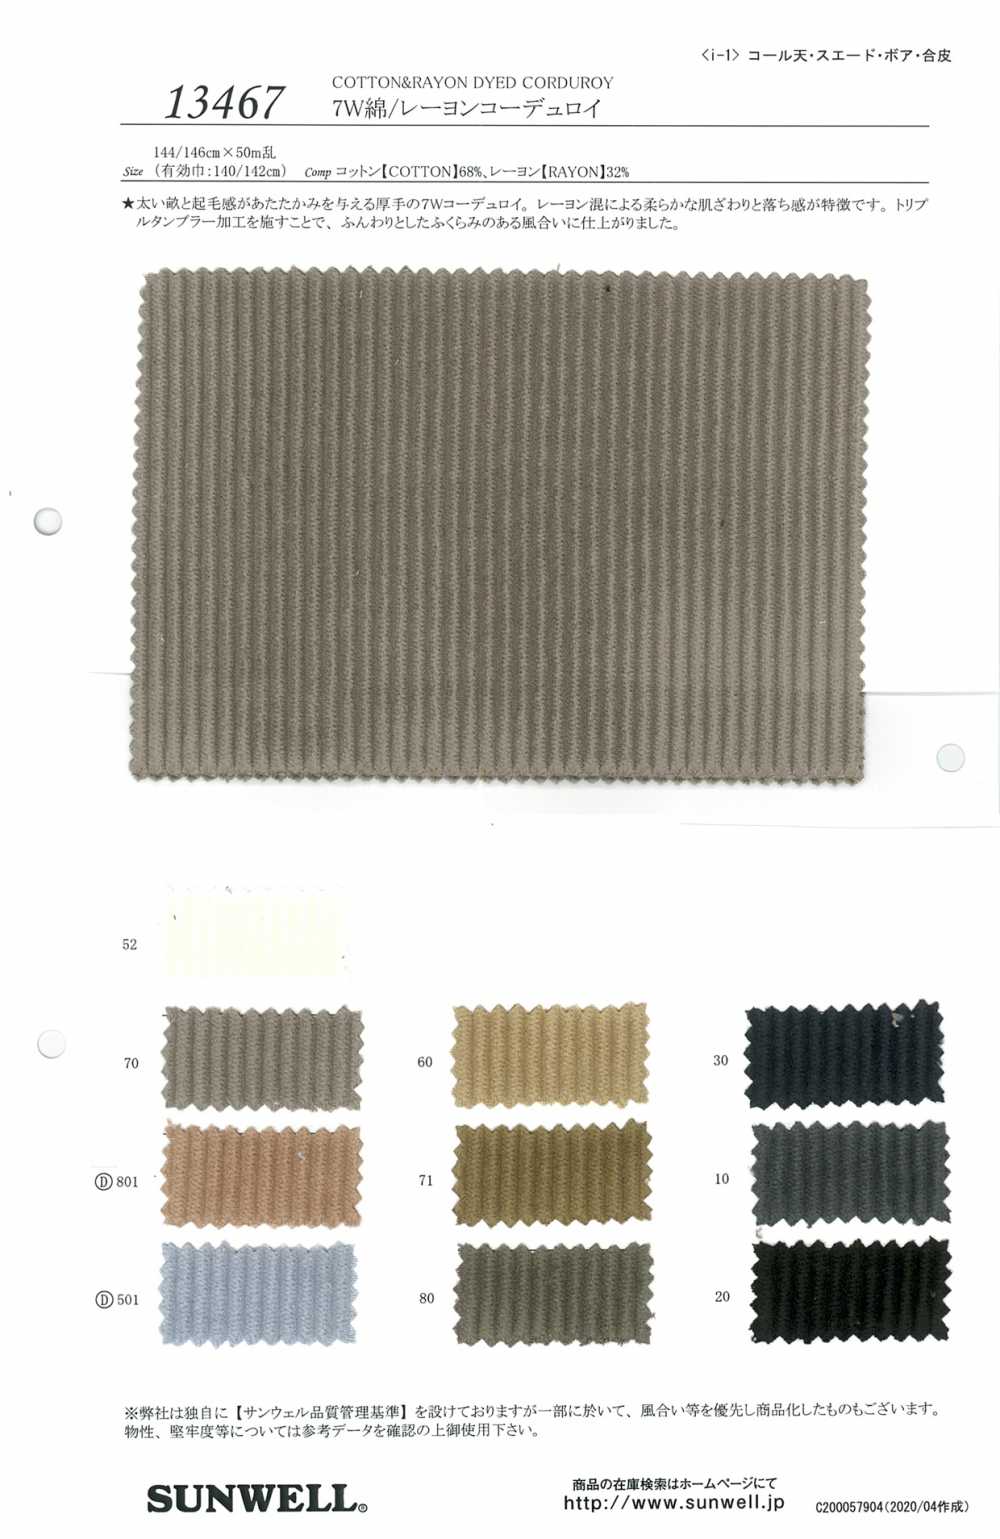 13467 7W Cotton / Rayon Corduroy[Textile / Fabric] SUNWELL